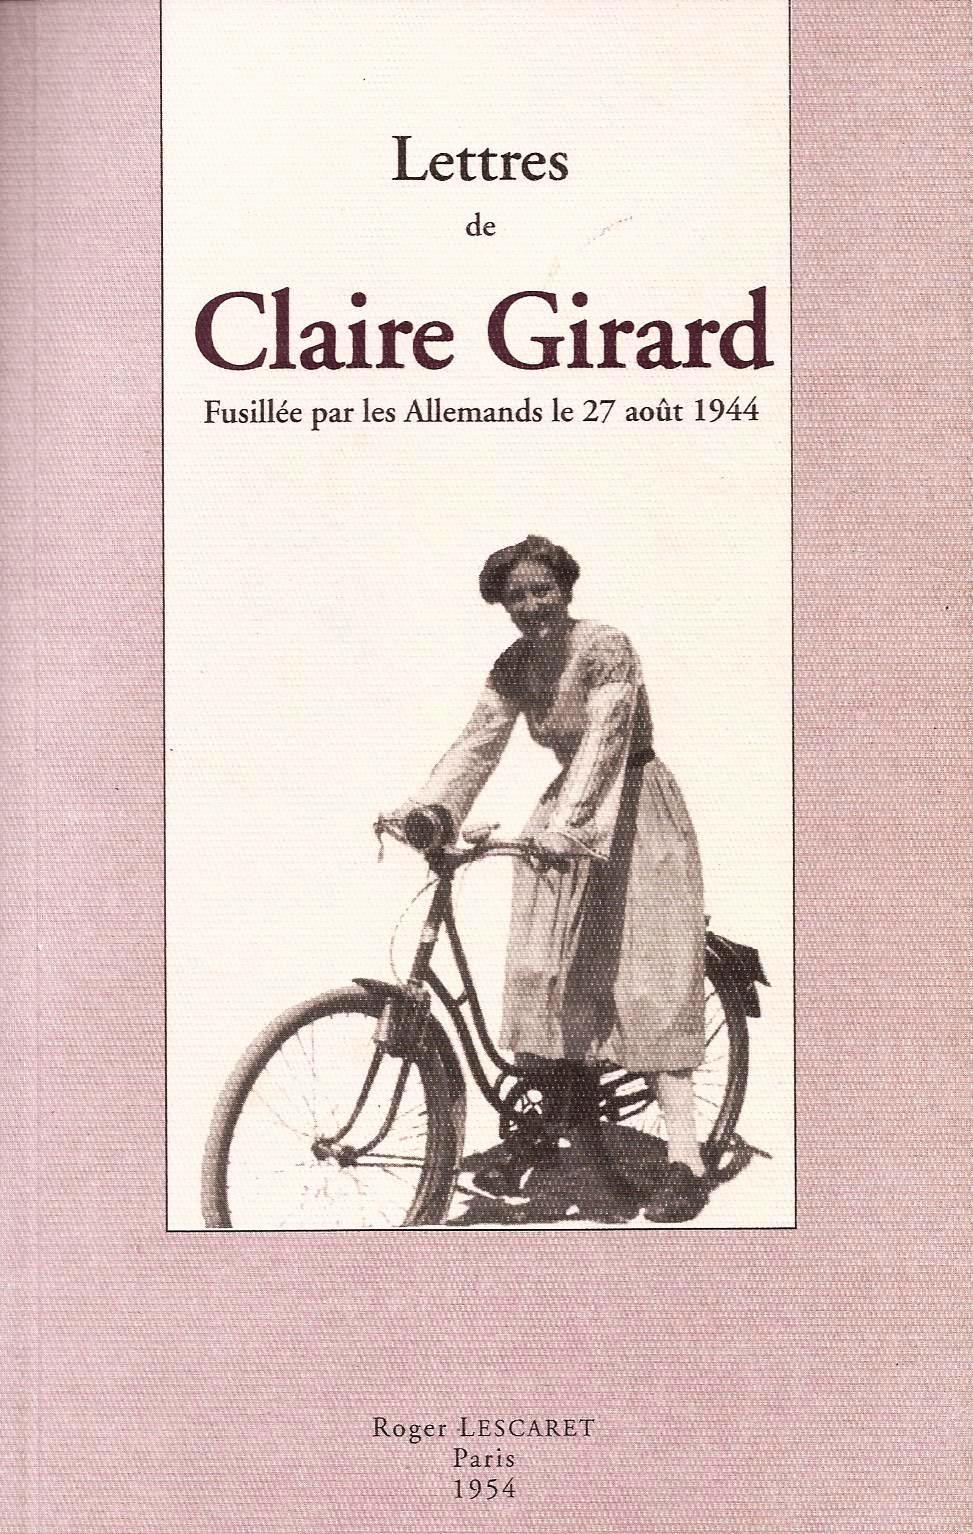 Lettres de Claire Girard